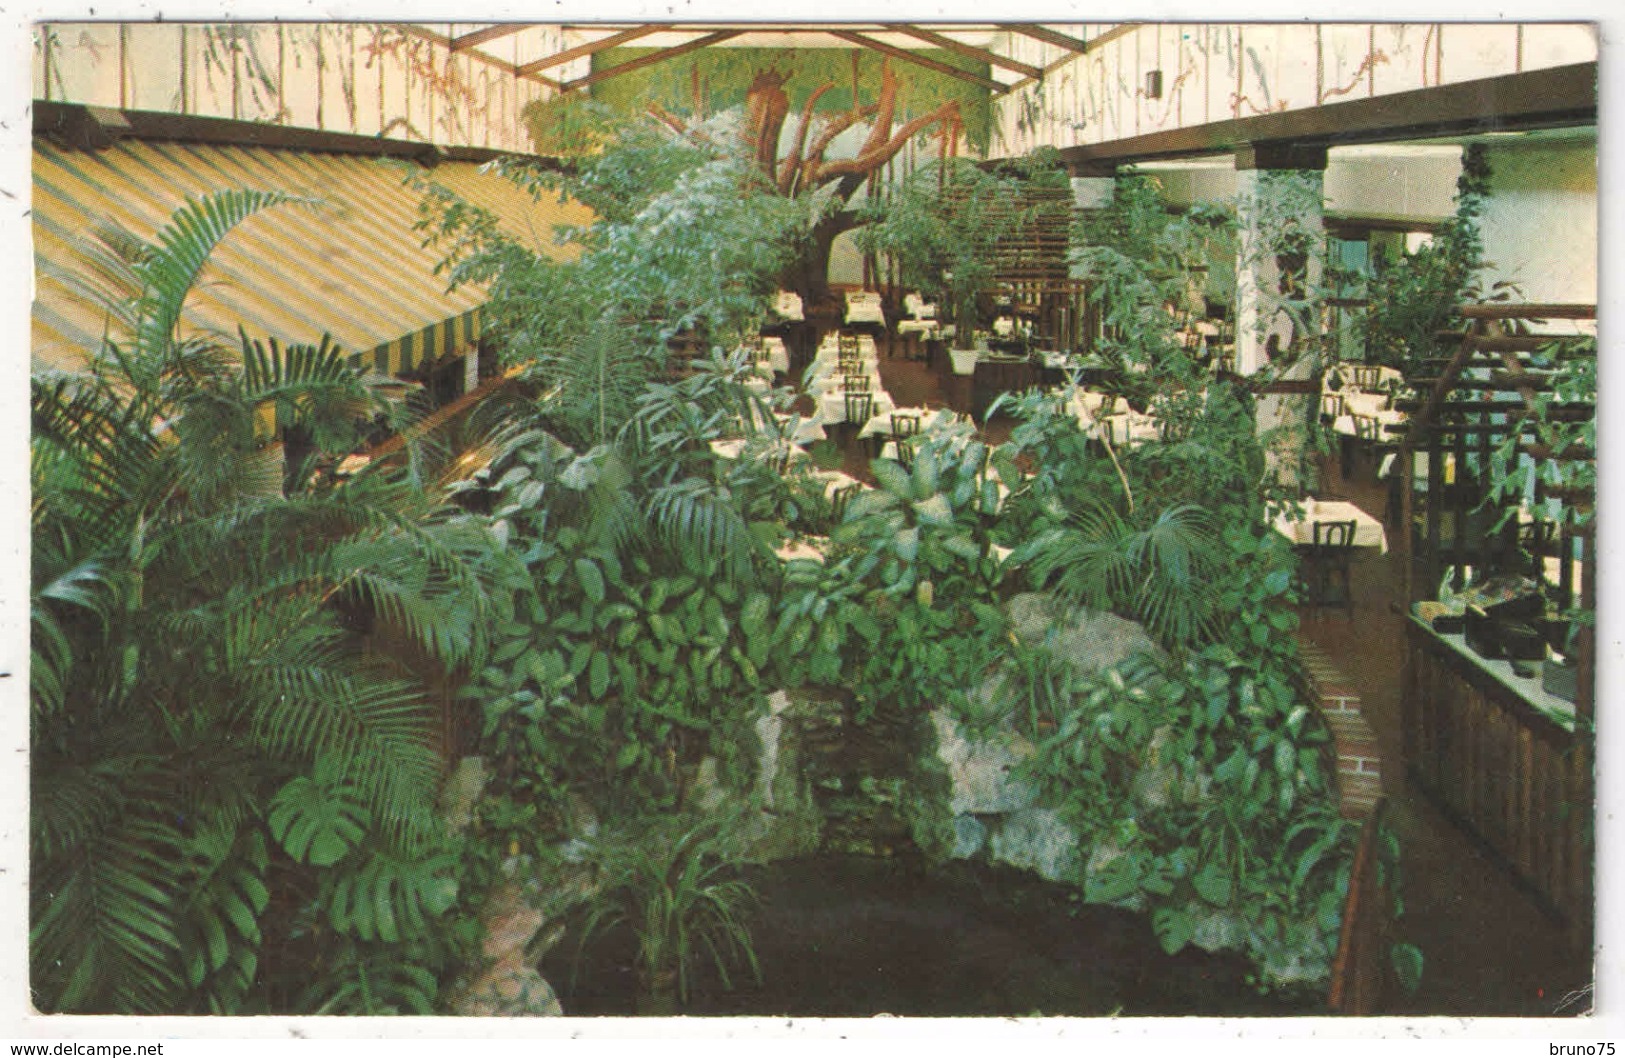 Garden Cafeteria - 232 Secons St. North, St. Petersburg, Florida - 1957 - St Petersburg